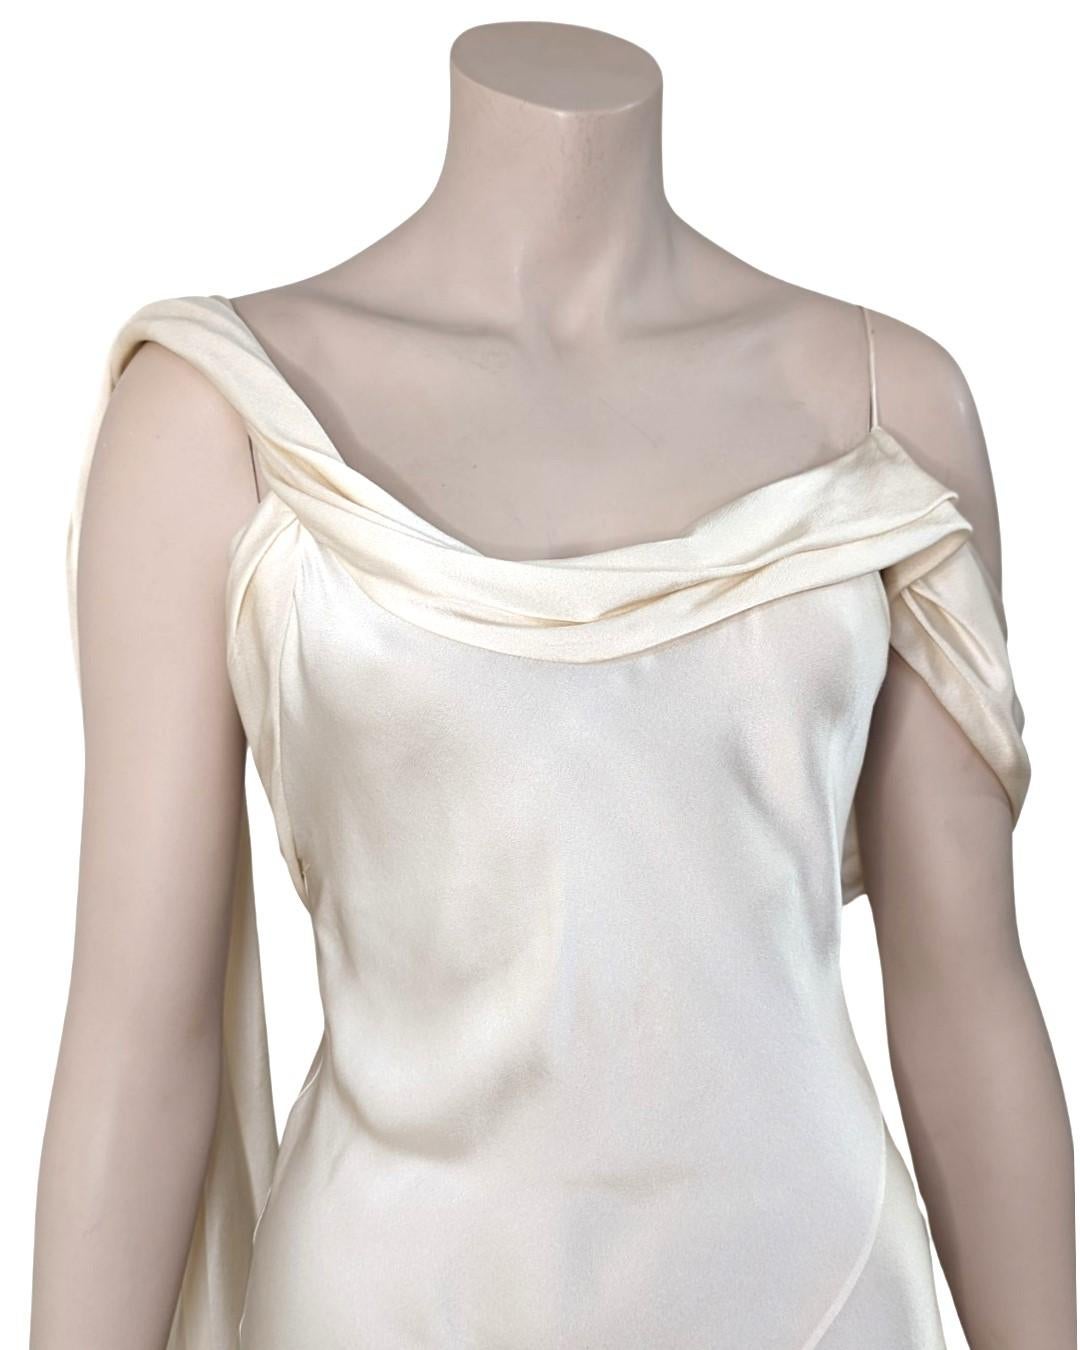 Women's Saint Laurent S/S2016 Asymmetric Silk Dress by Hedi Slimane For Sale